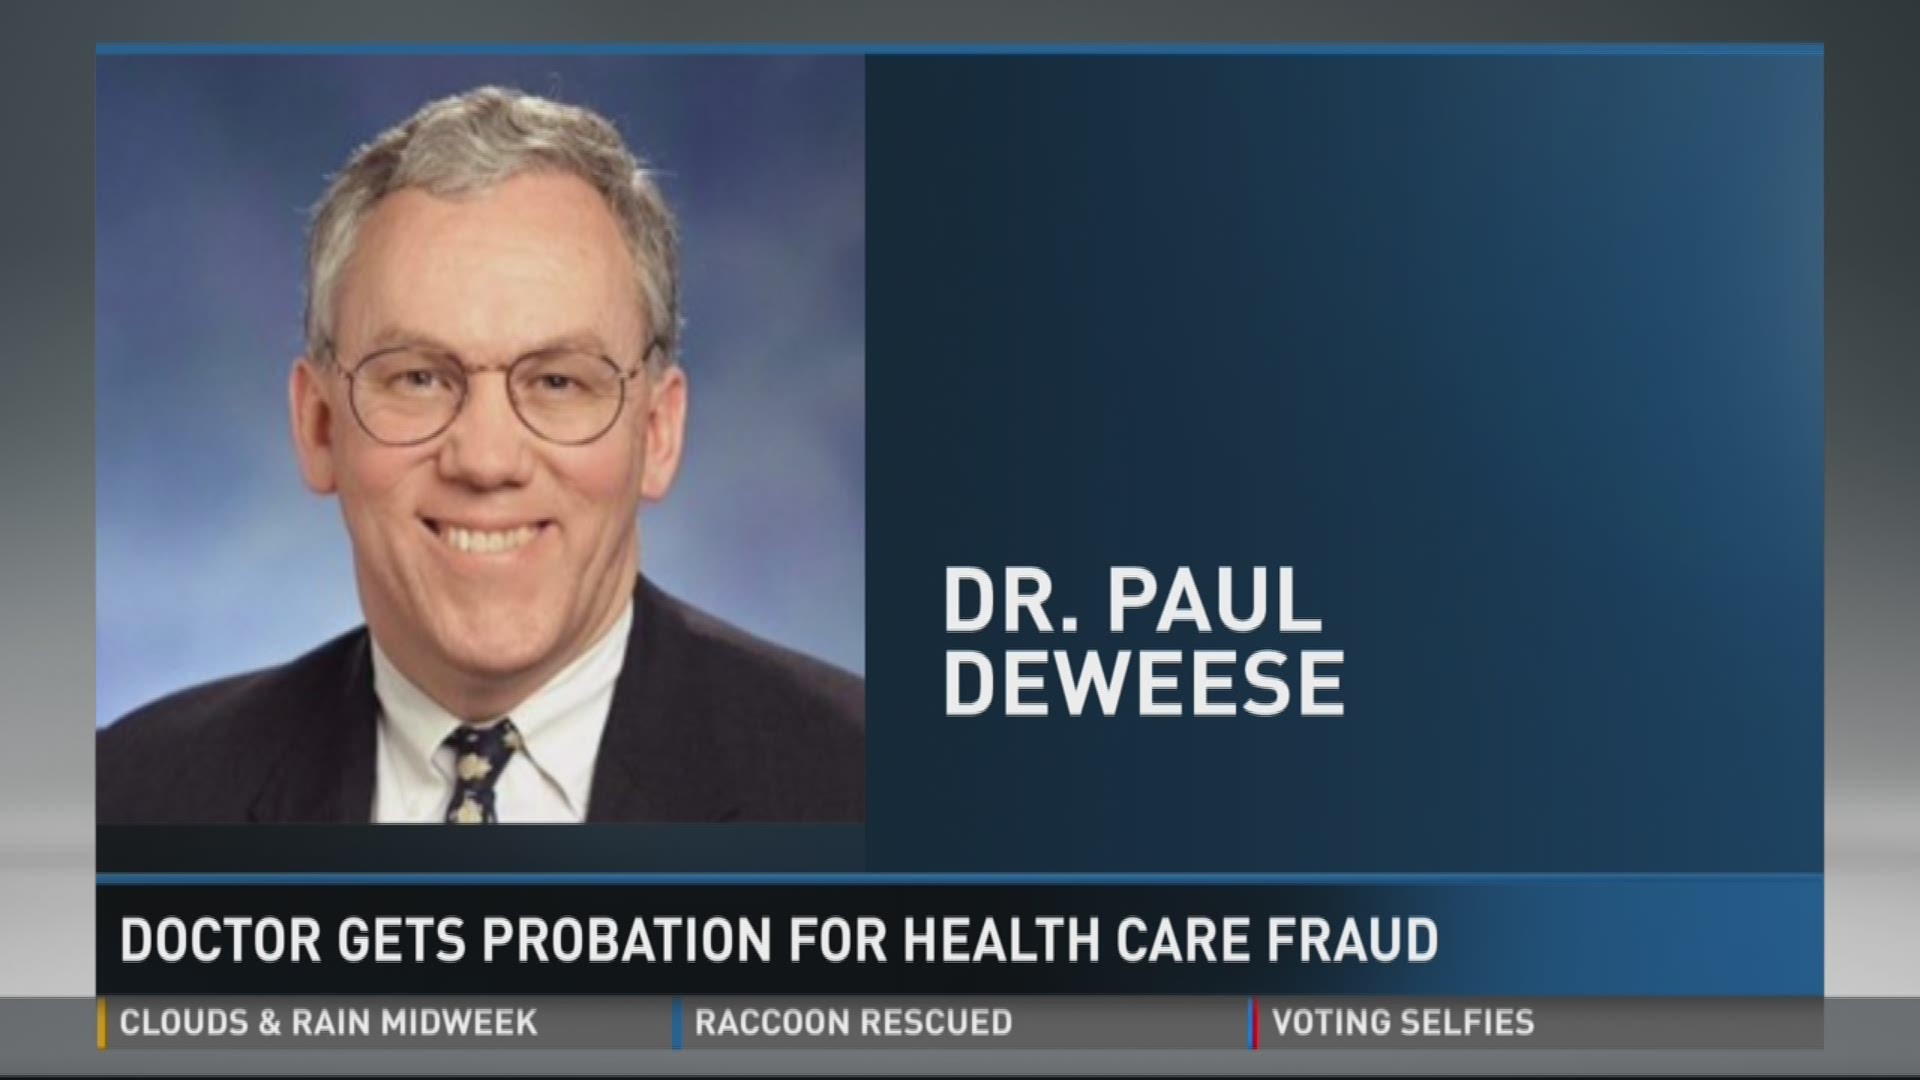 Doctor gets probation for health care fraud